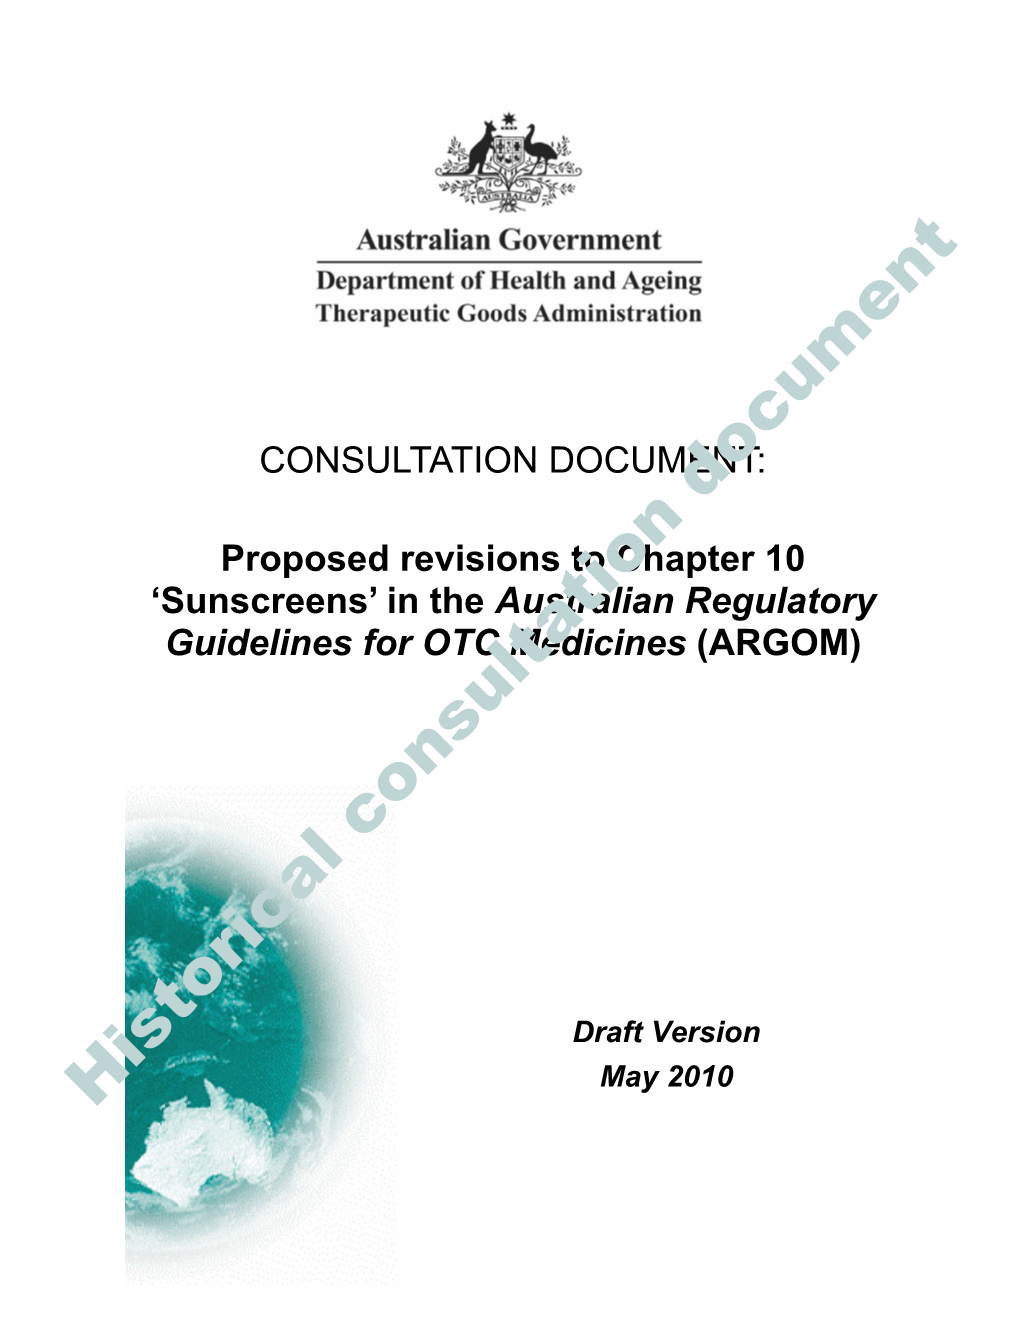 Sunscreens’ in the Australian Regulatory Guidelines for OTC Medicines (ARGOM)